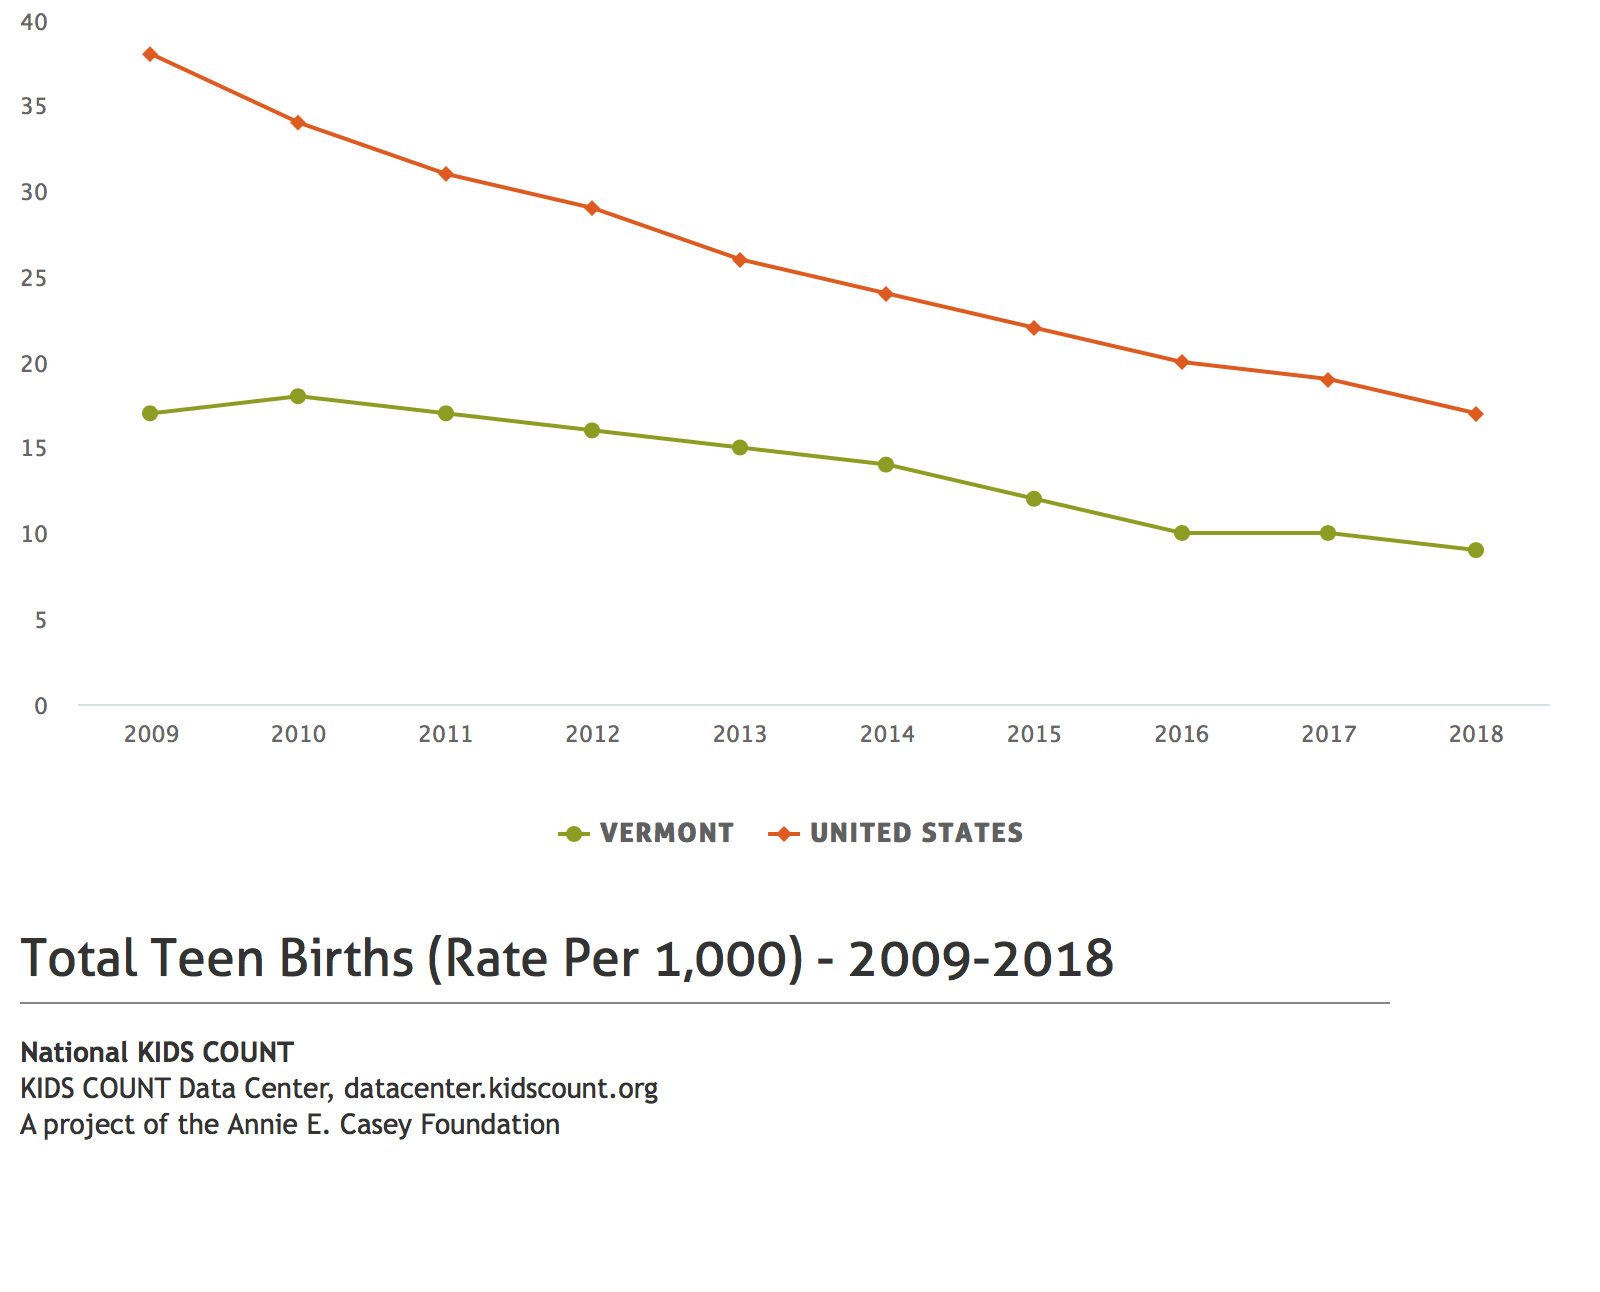 Teen births per 1,000